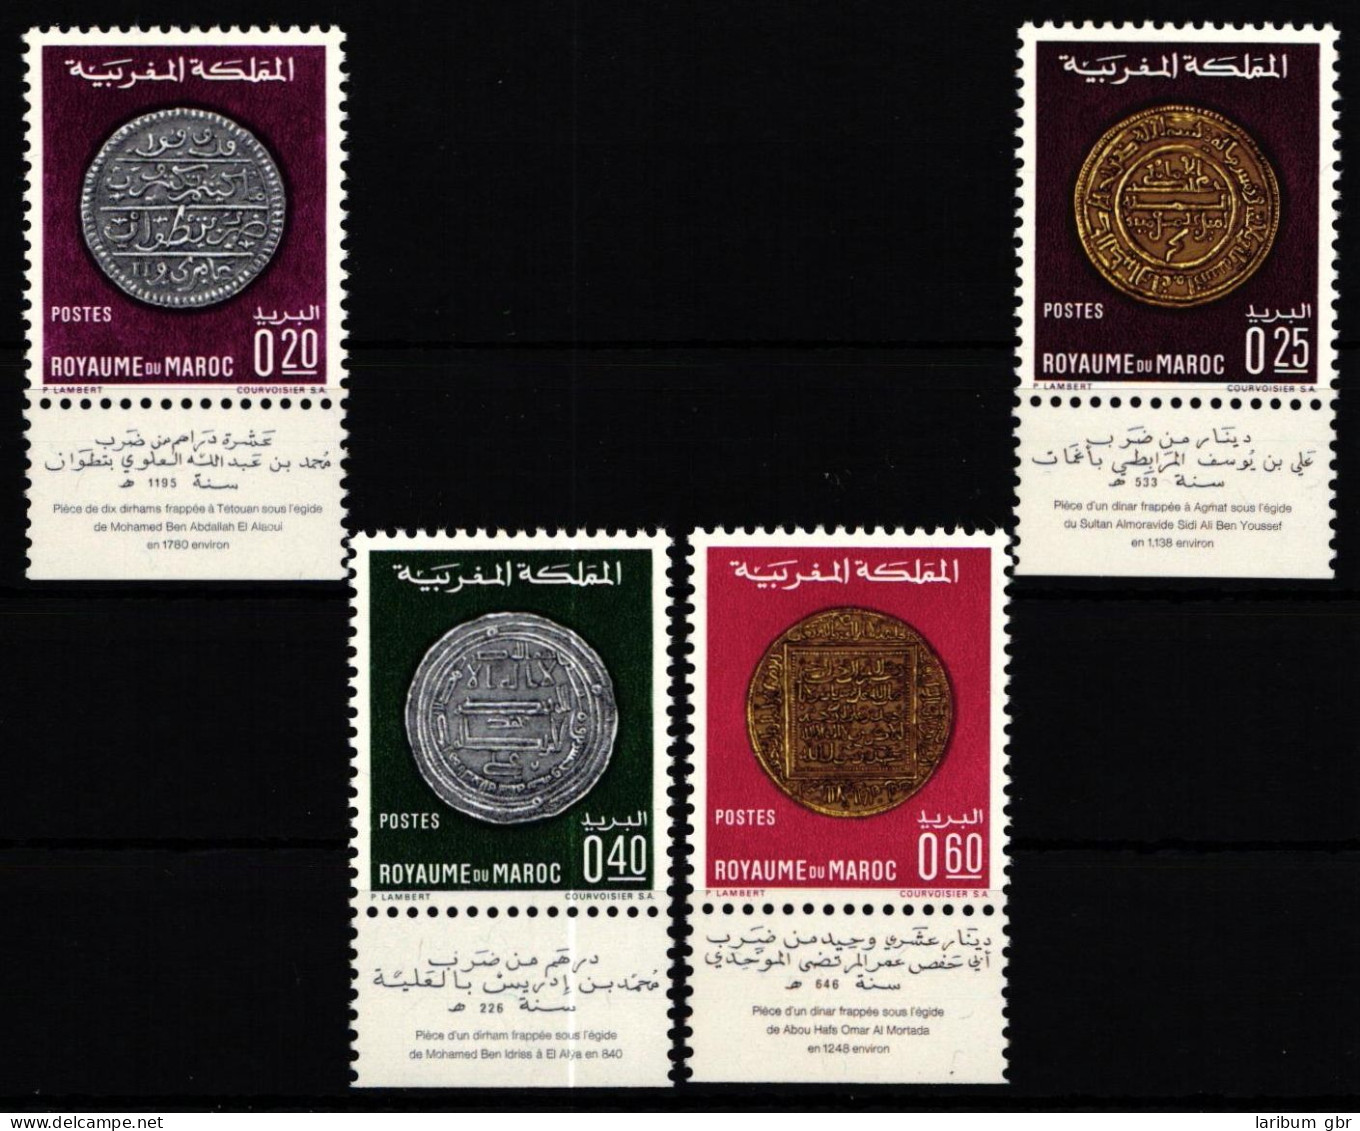 Marokko 641-644 Postfrisch #KX275 - Morocco (1956-...)